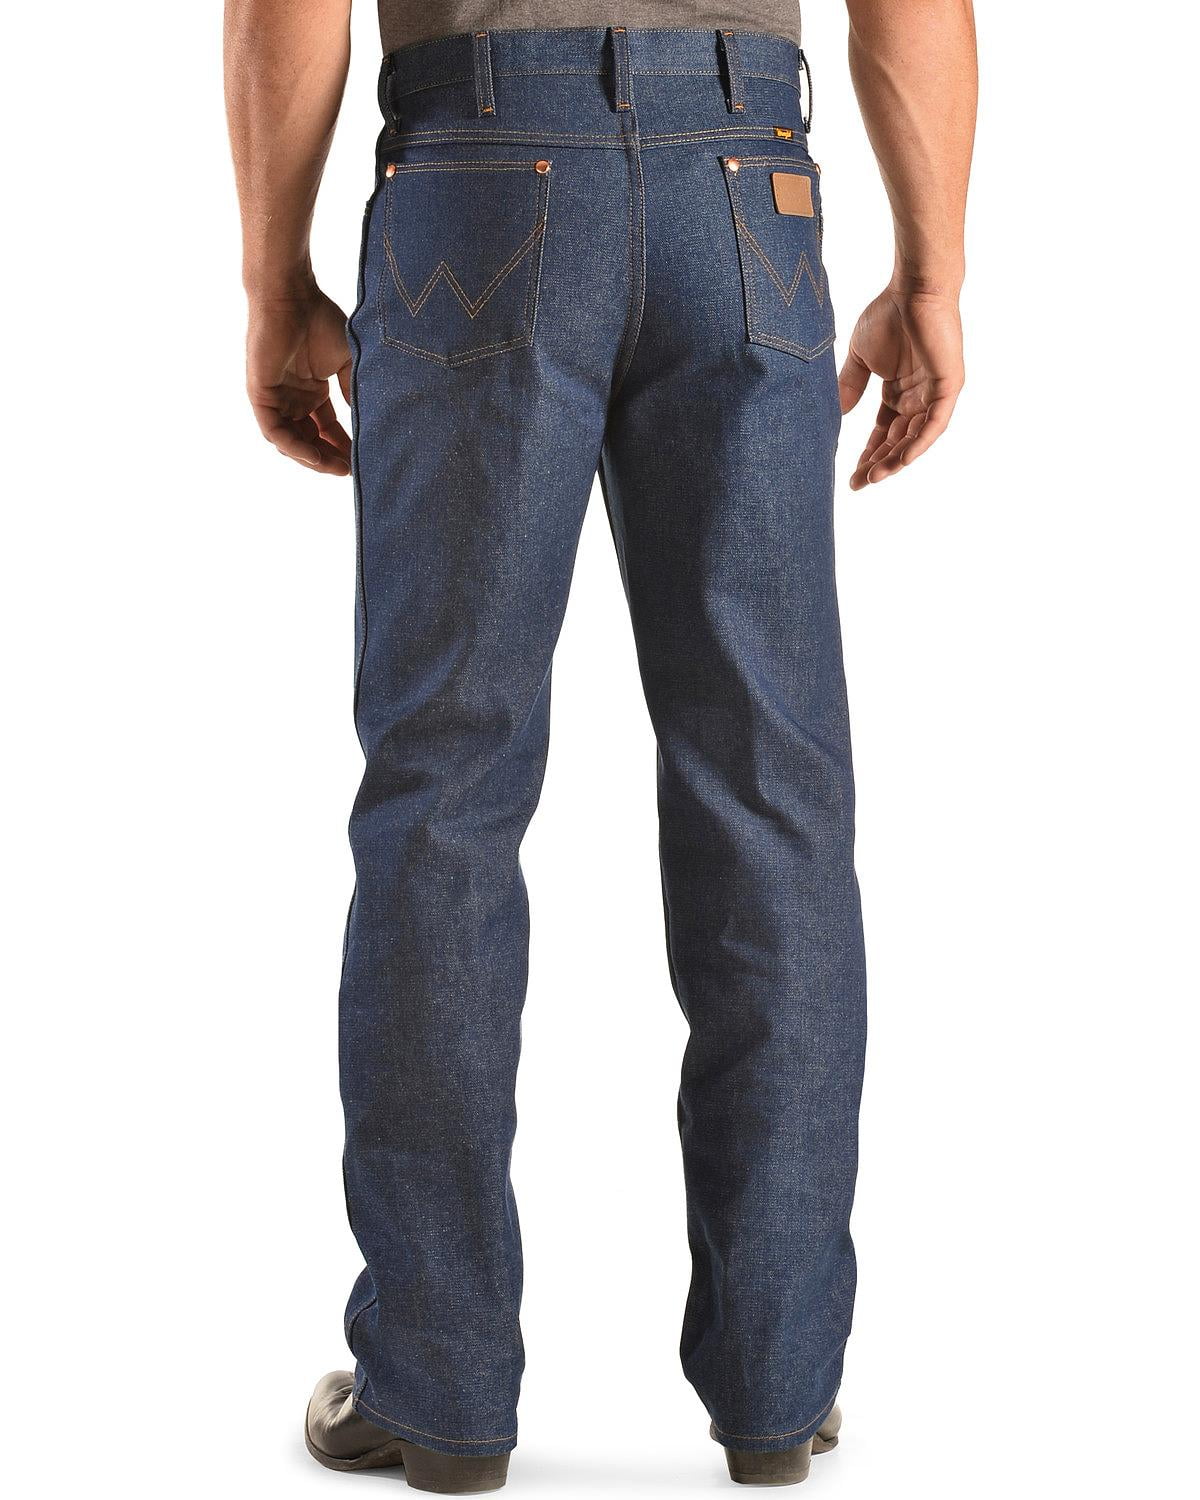 Wrangler Men's Jeans 936 Slim Fit Rigid - 0936Den 